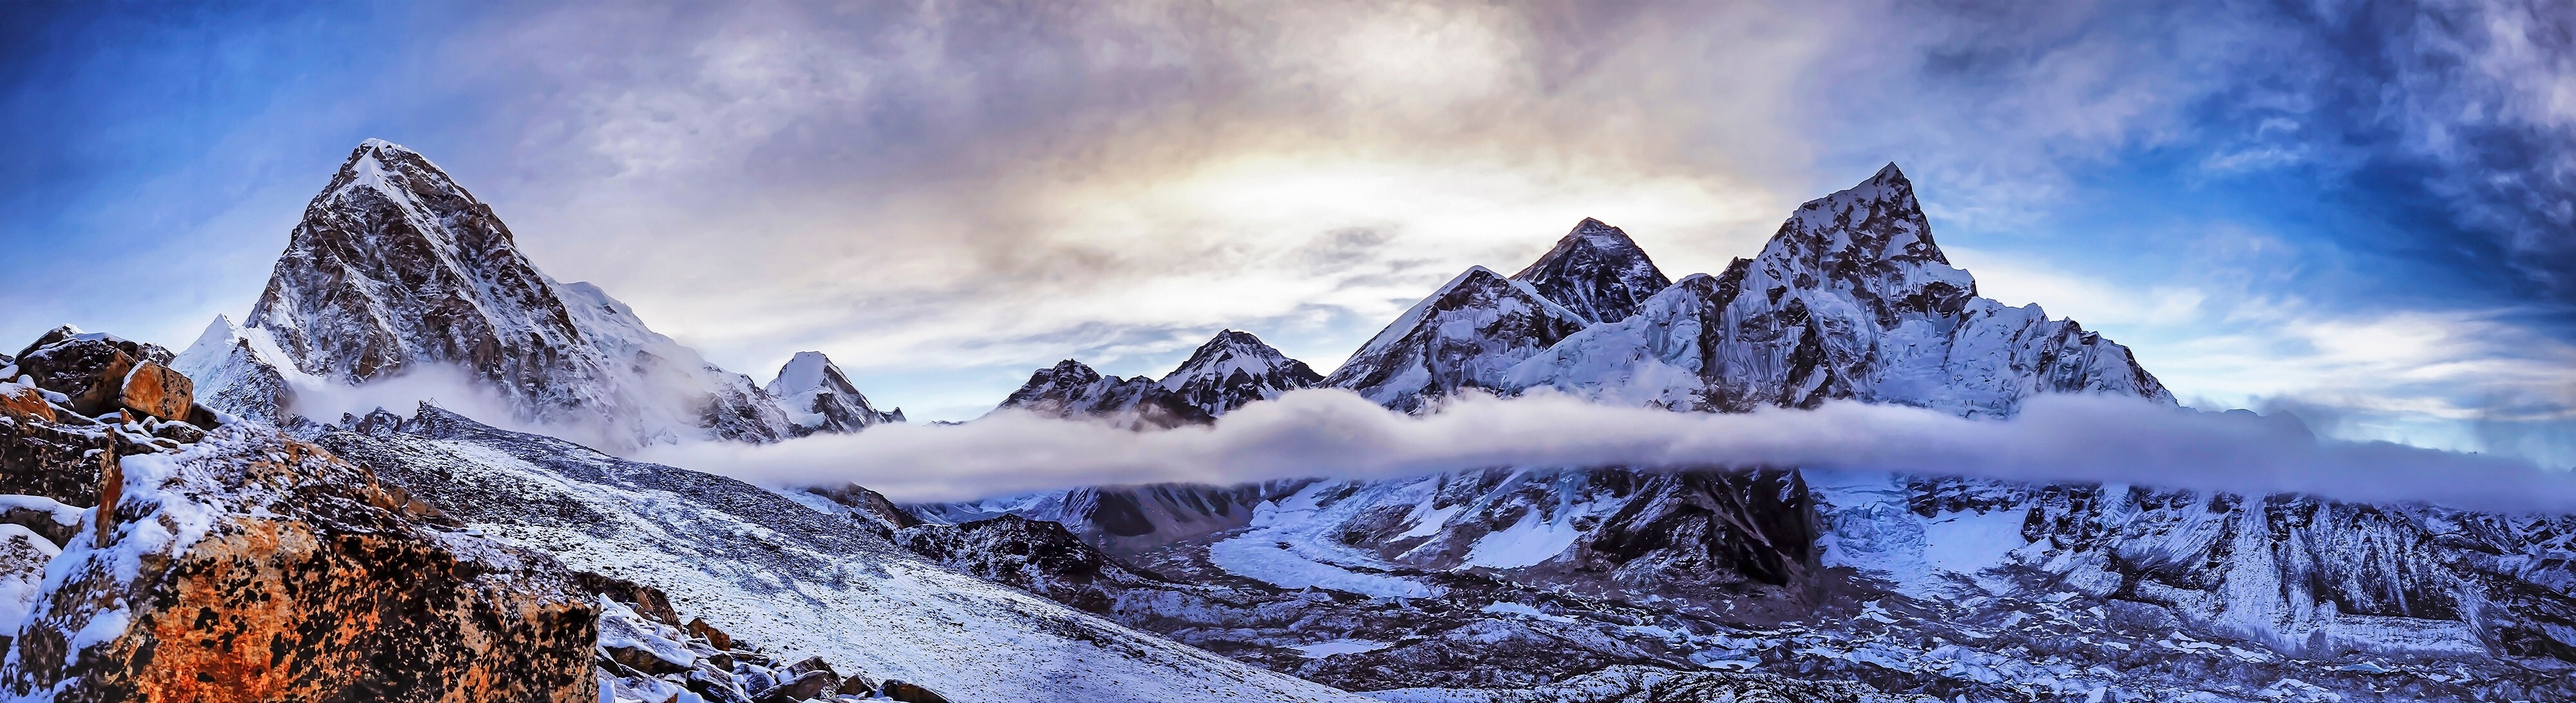 Himalayan mountain peaks in Nepal. Photo: Shutterstock